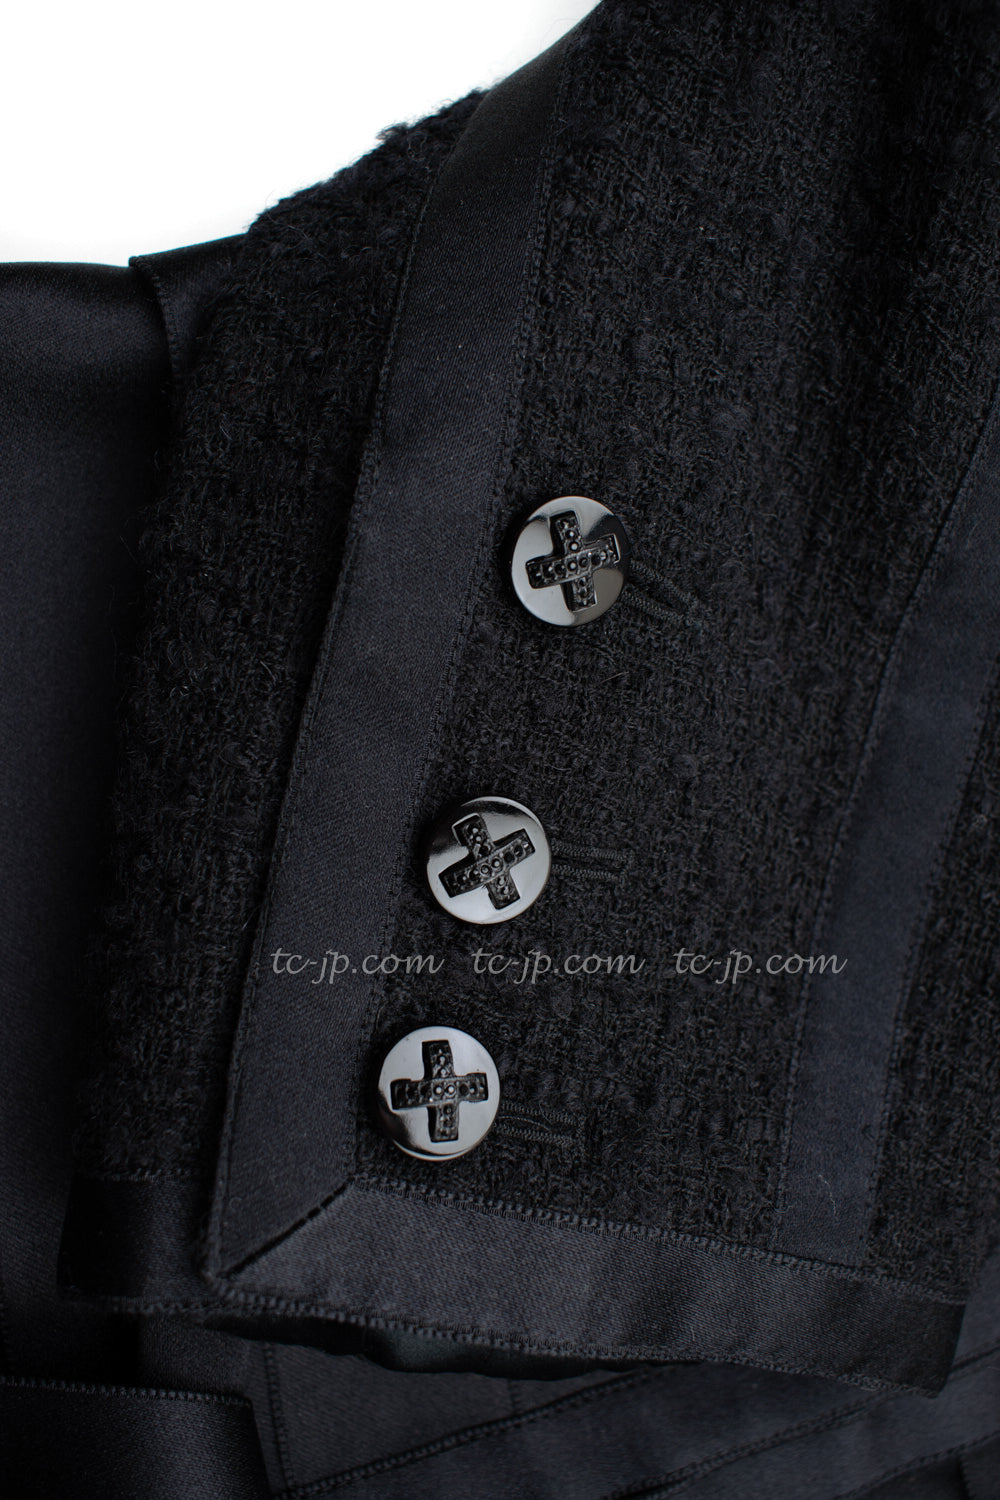 CHANEL 06A Drew Barrymore Wool Black Jacket 38 シャネル ブラック・シルク・リボン・ジャケット 冠婚葬祭 即発